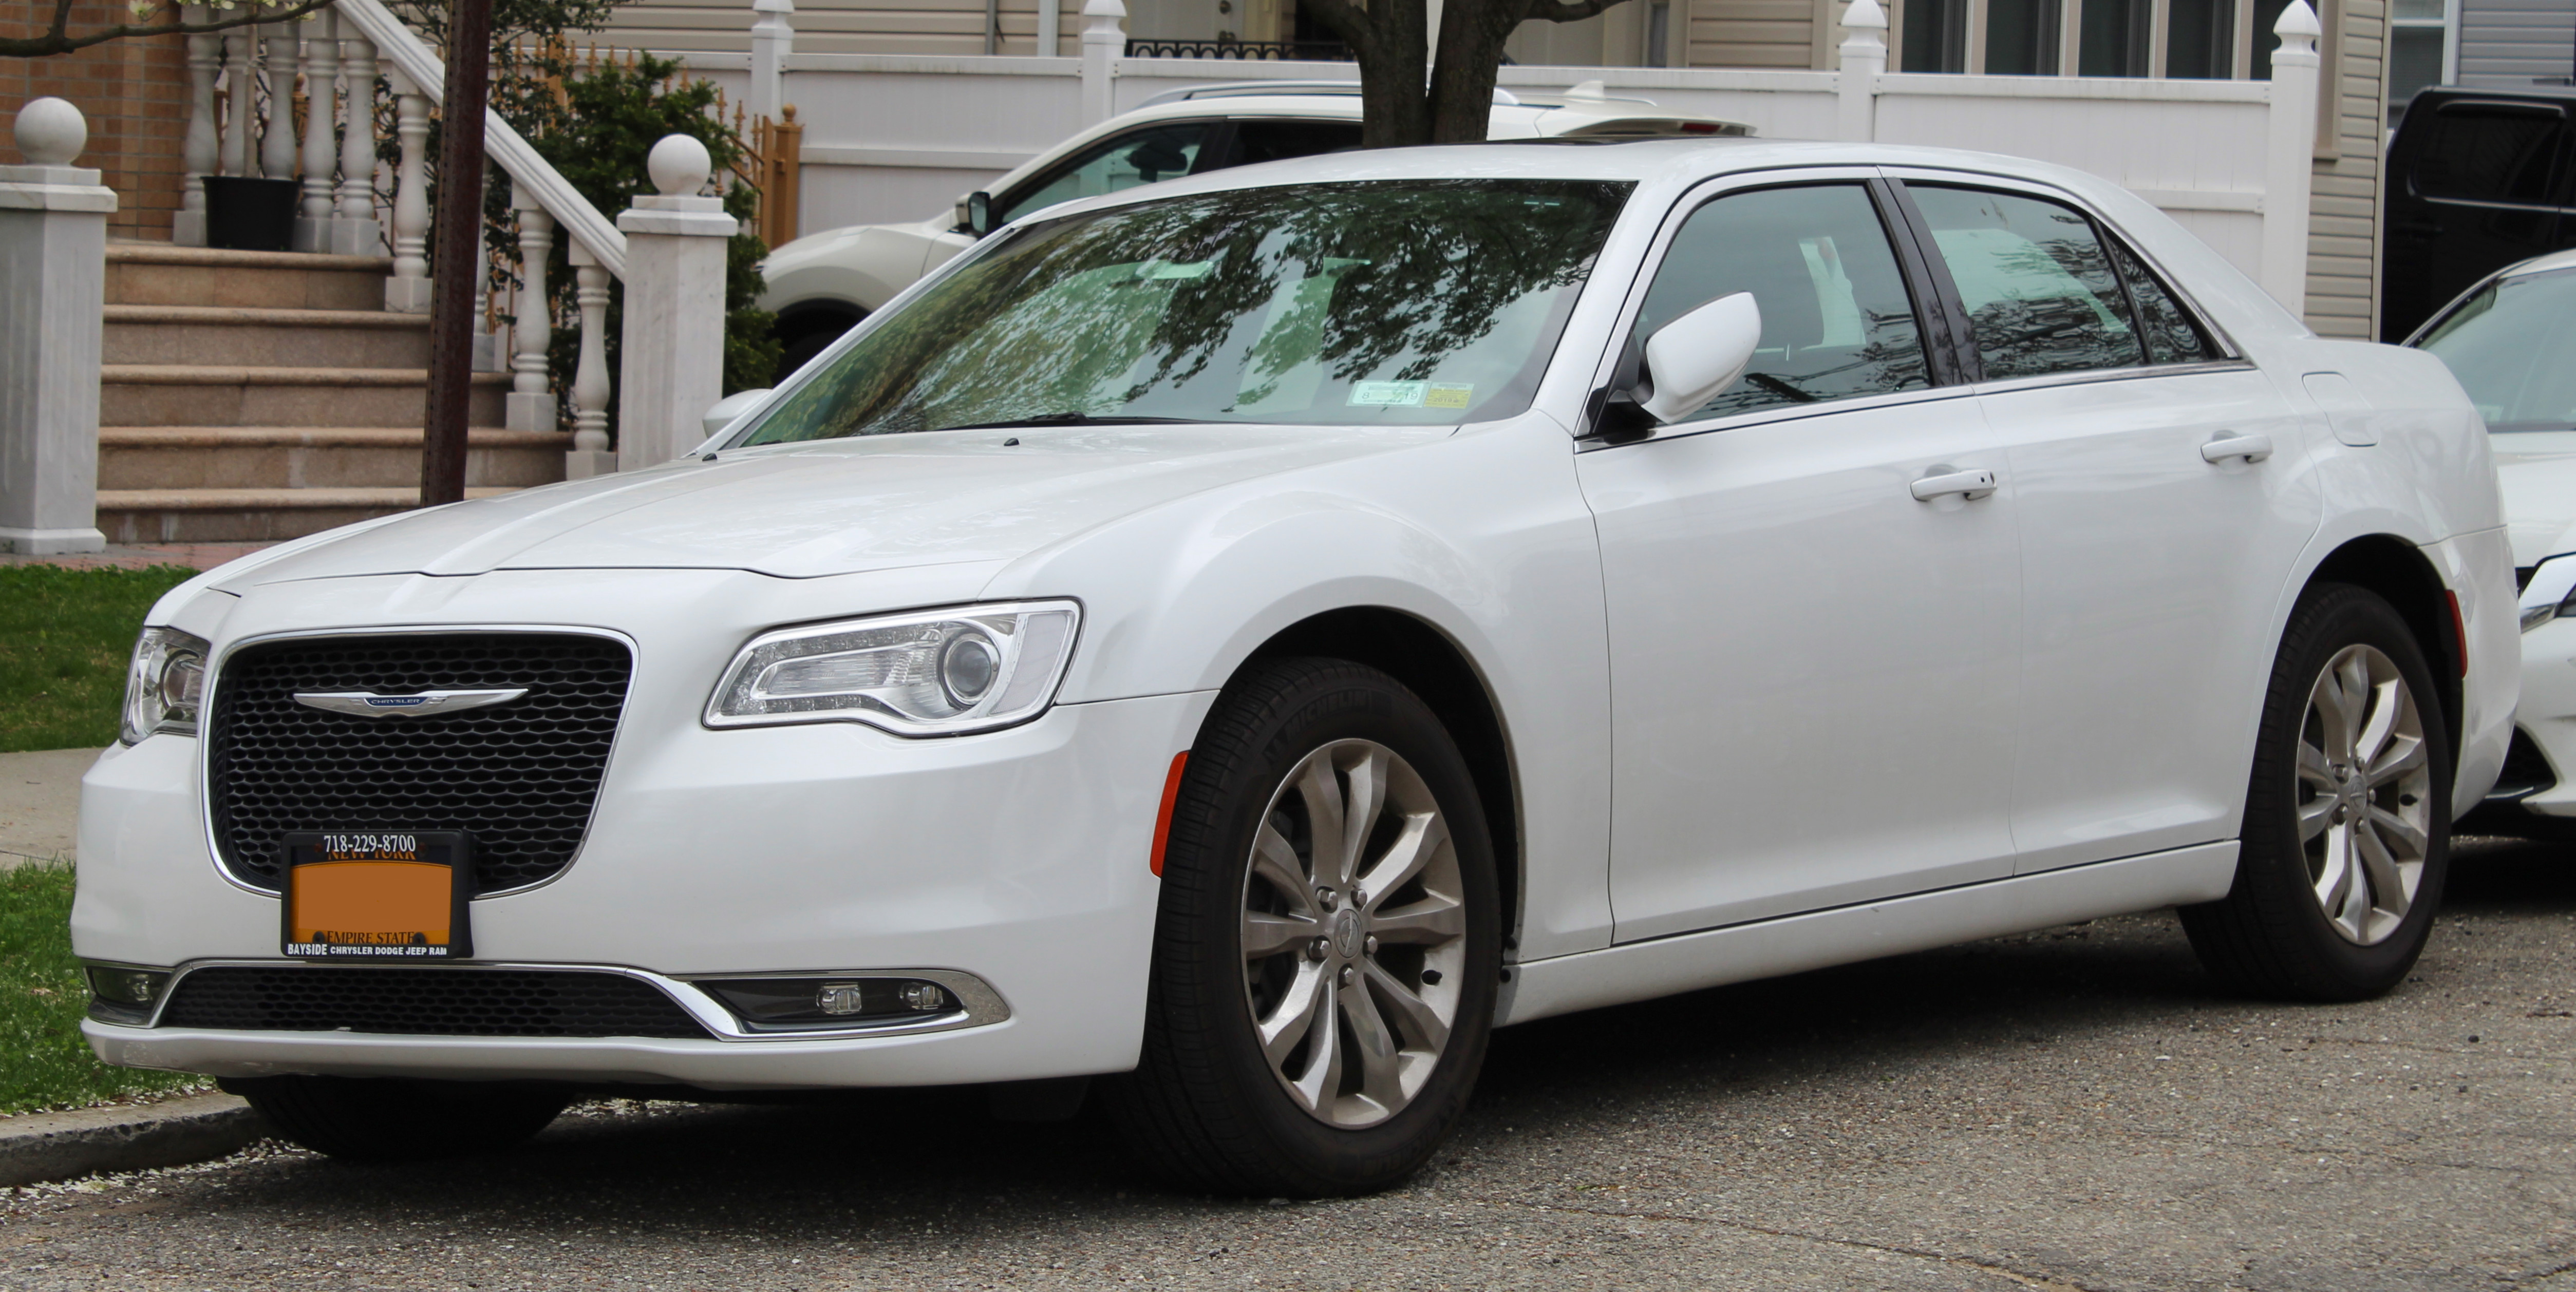 Chrysler 300 - Wikipedia